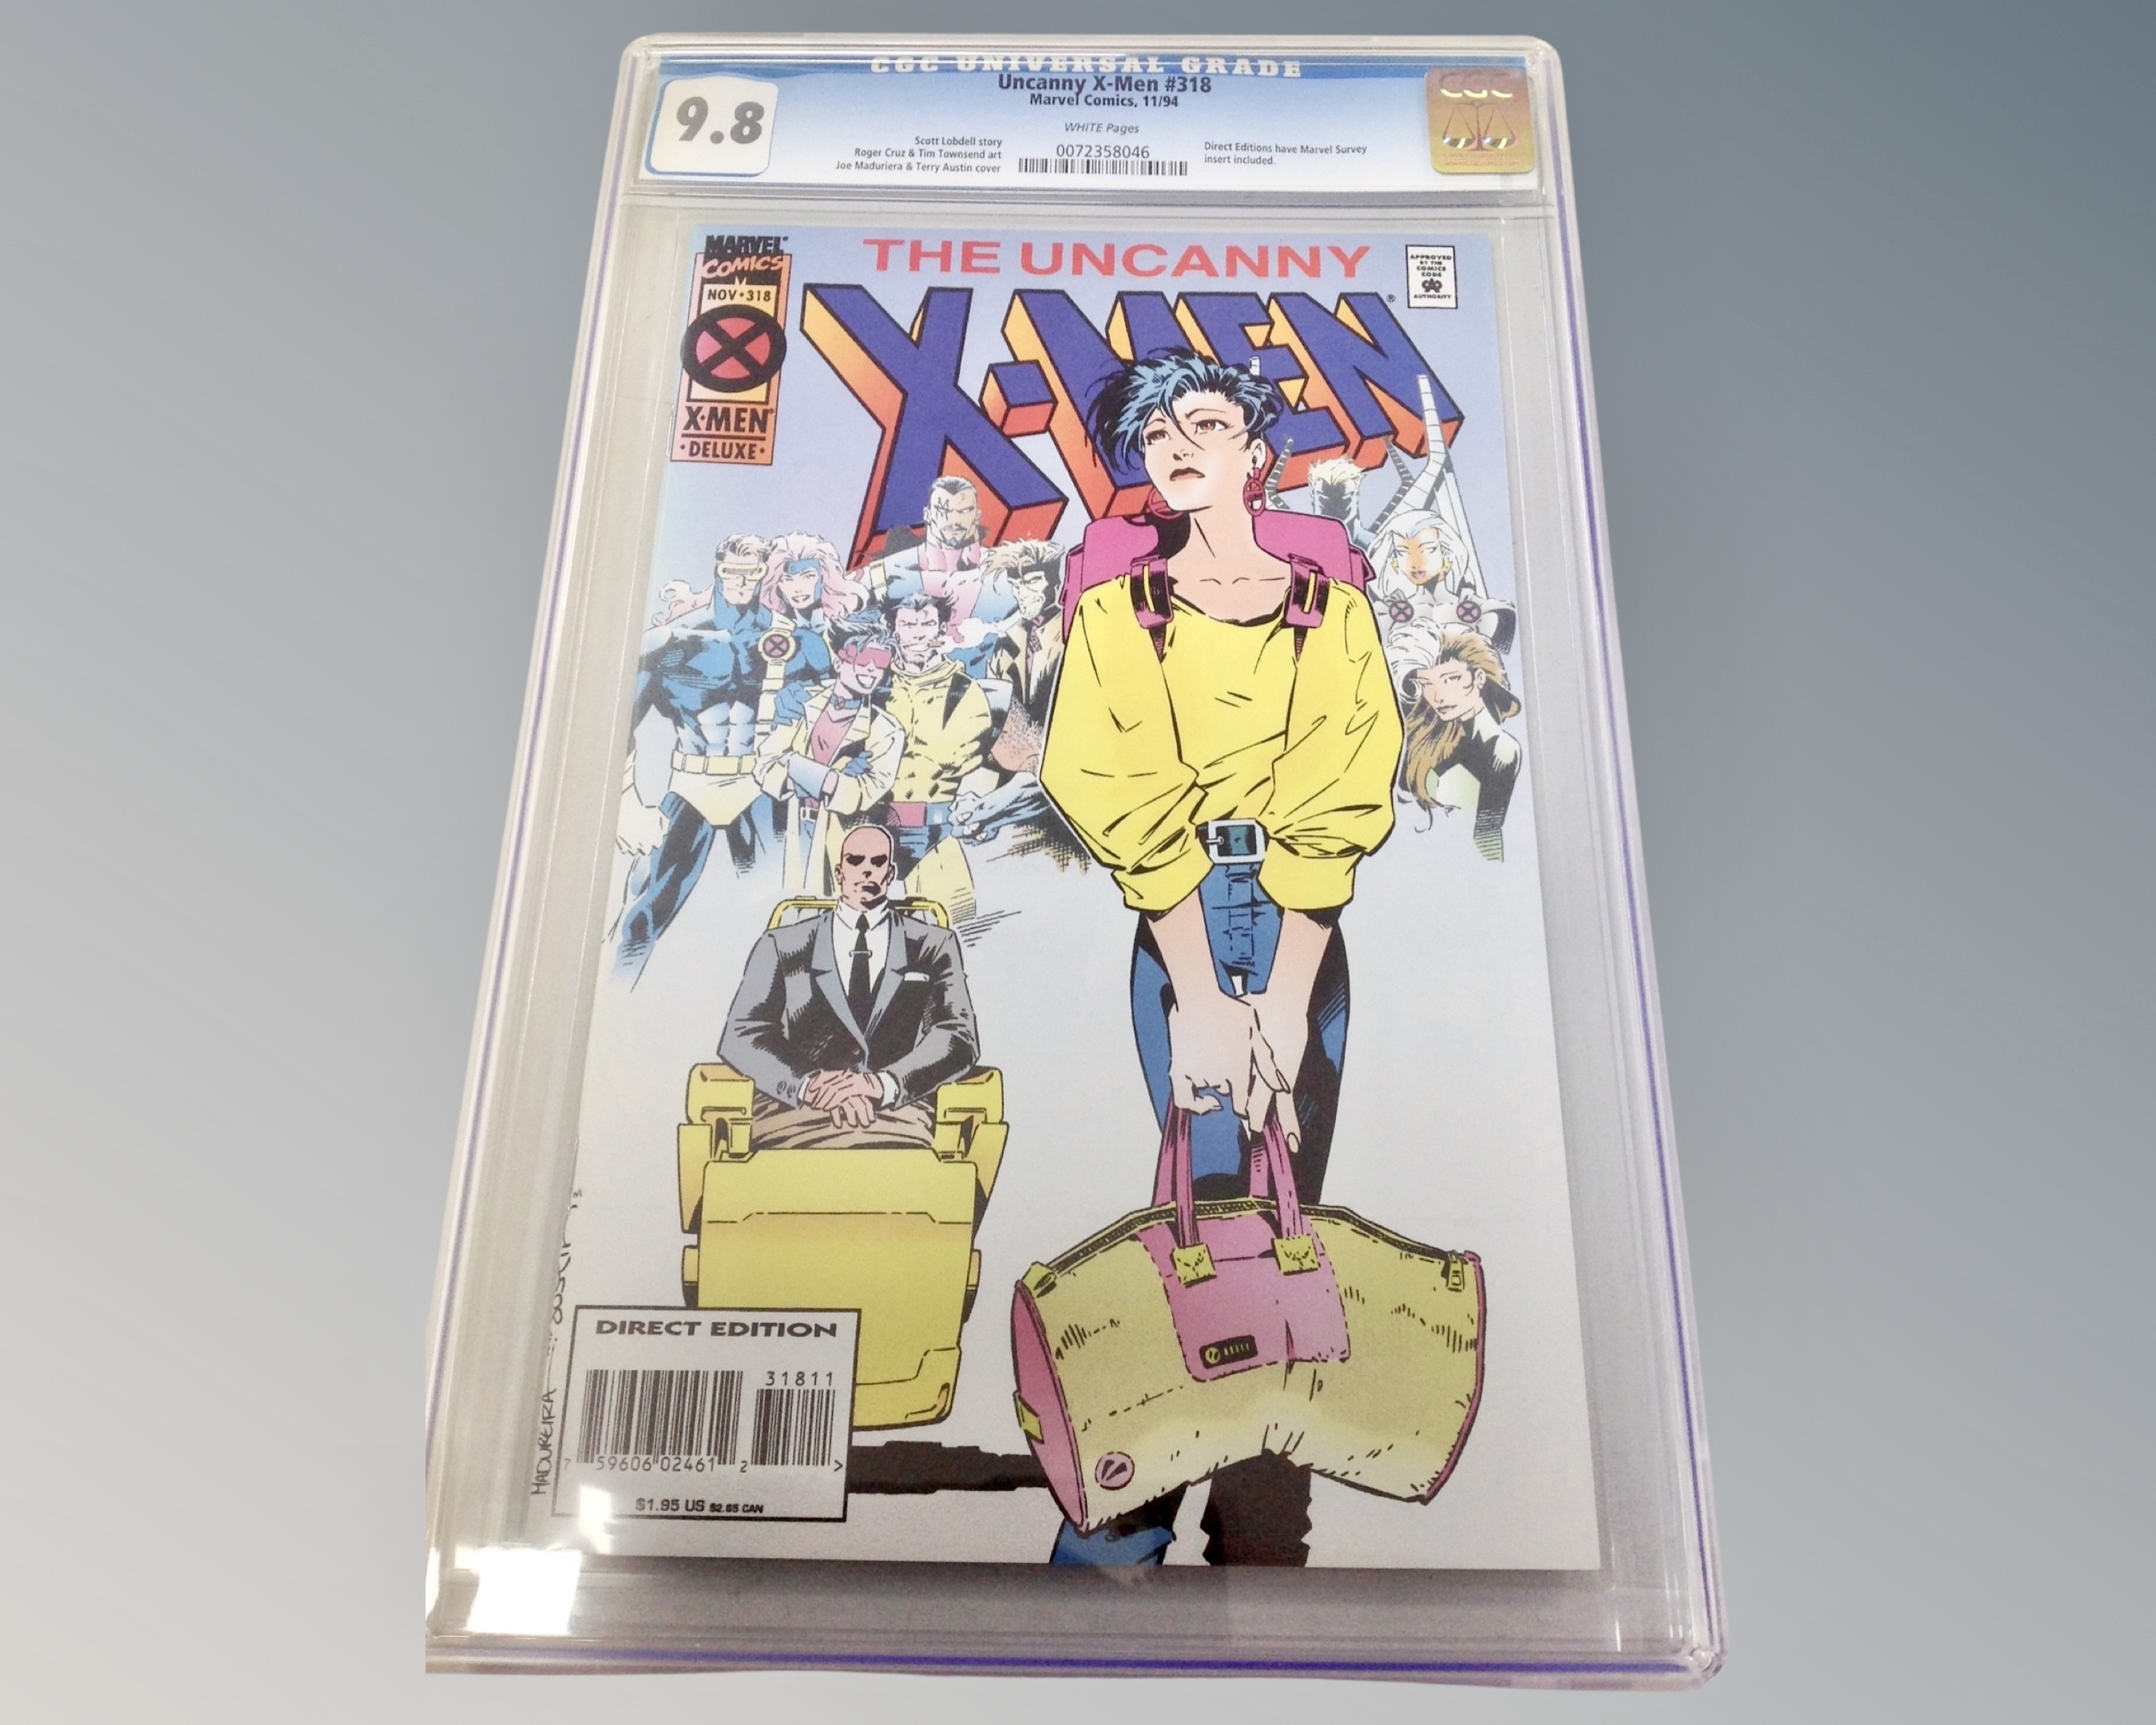 Marvel Comics : The Uncanny X-Men issue 318 CGC Universal Grade, slabbed and graded 9.